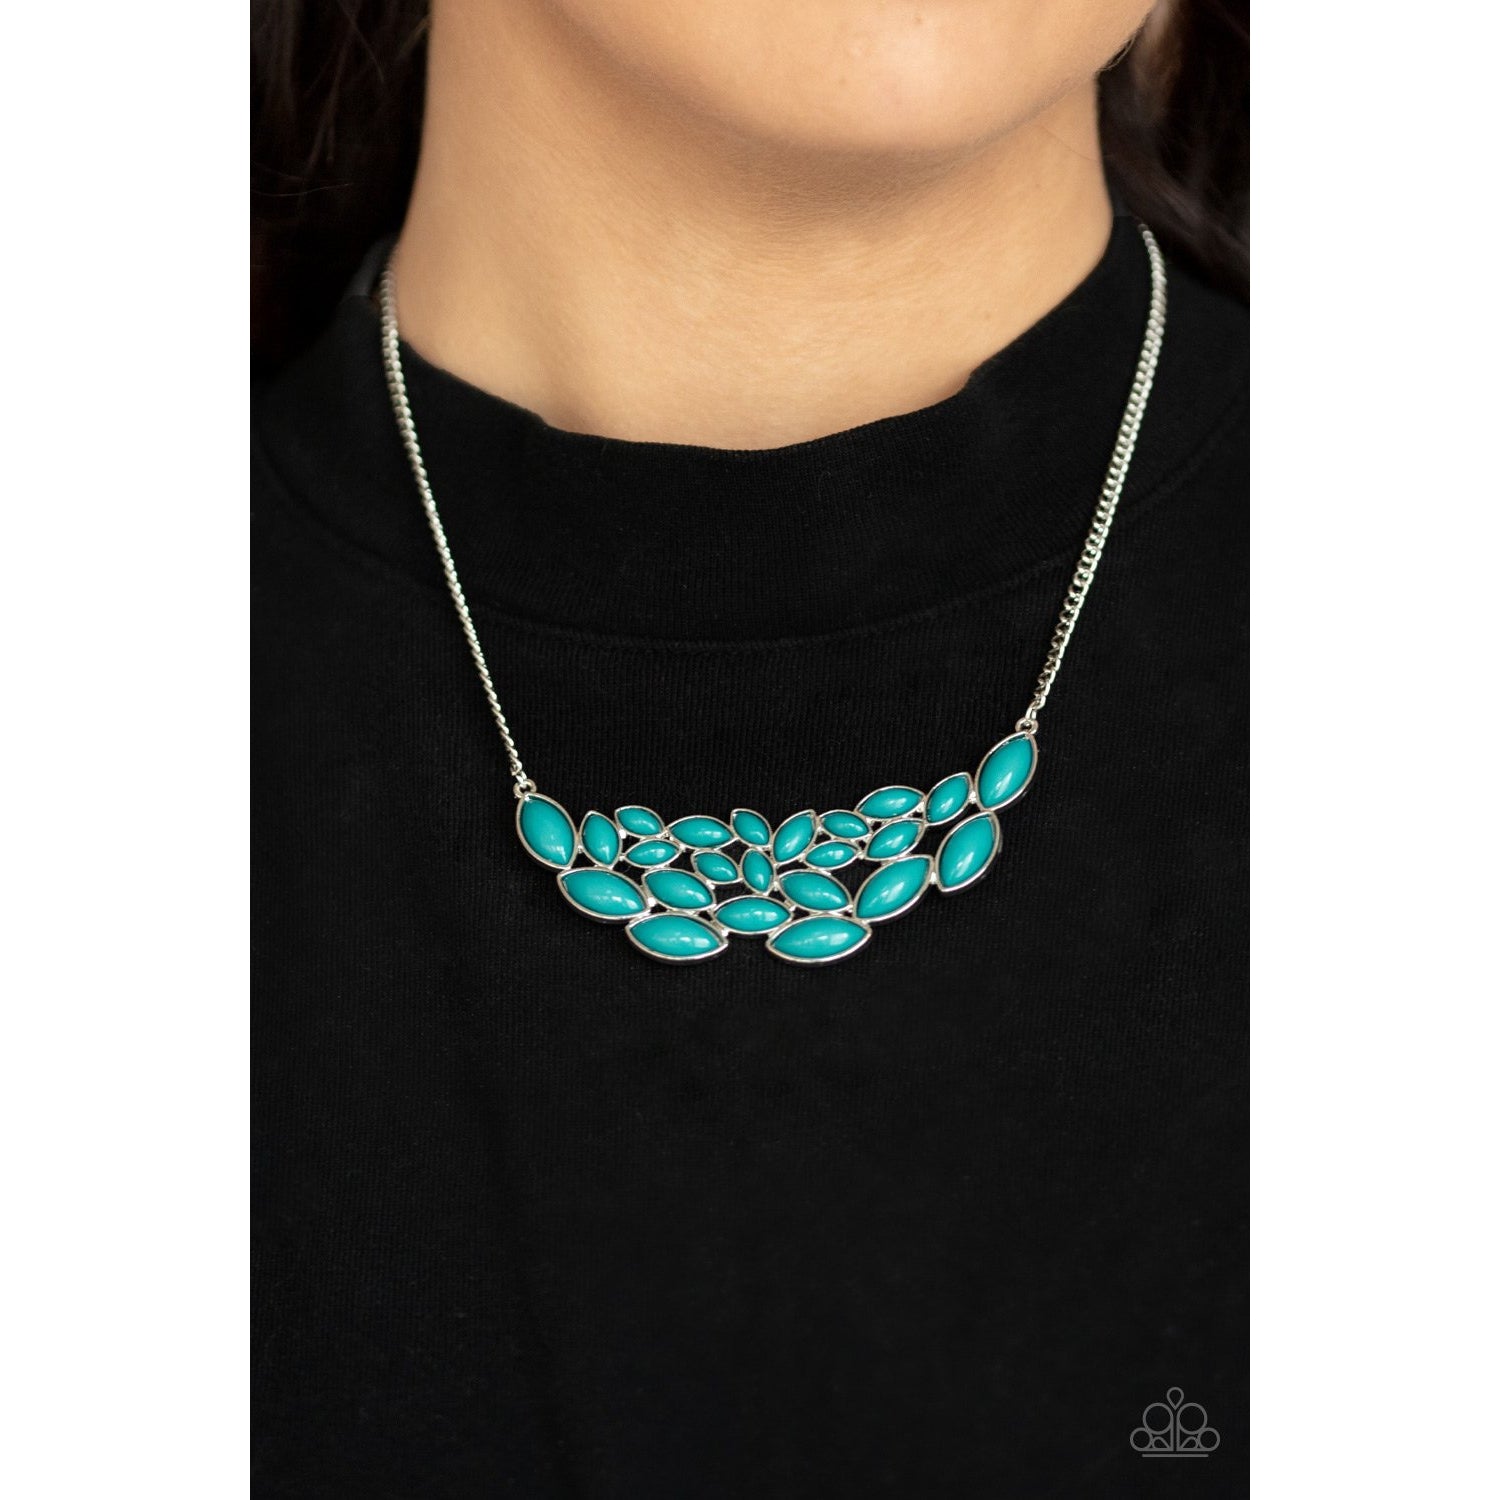 Eden Escape - Blue Beads Necklace - Paparazzi Accessories - GlaMarous Titi Jewels